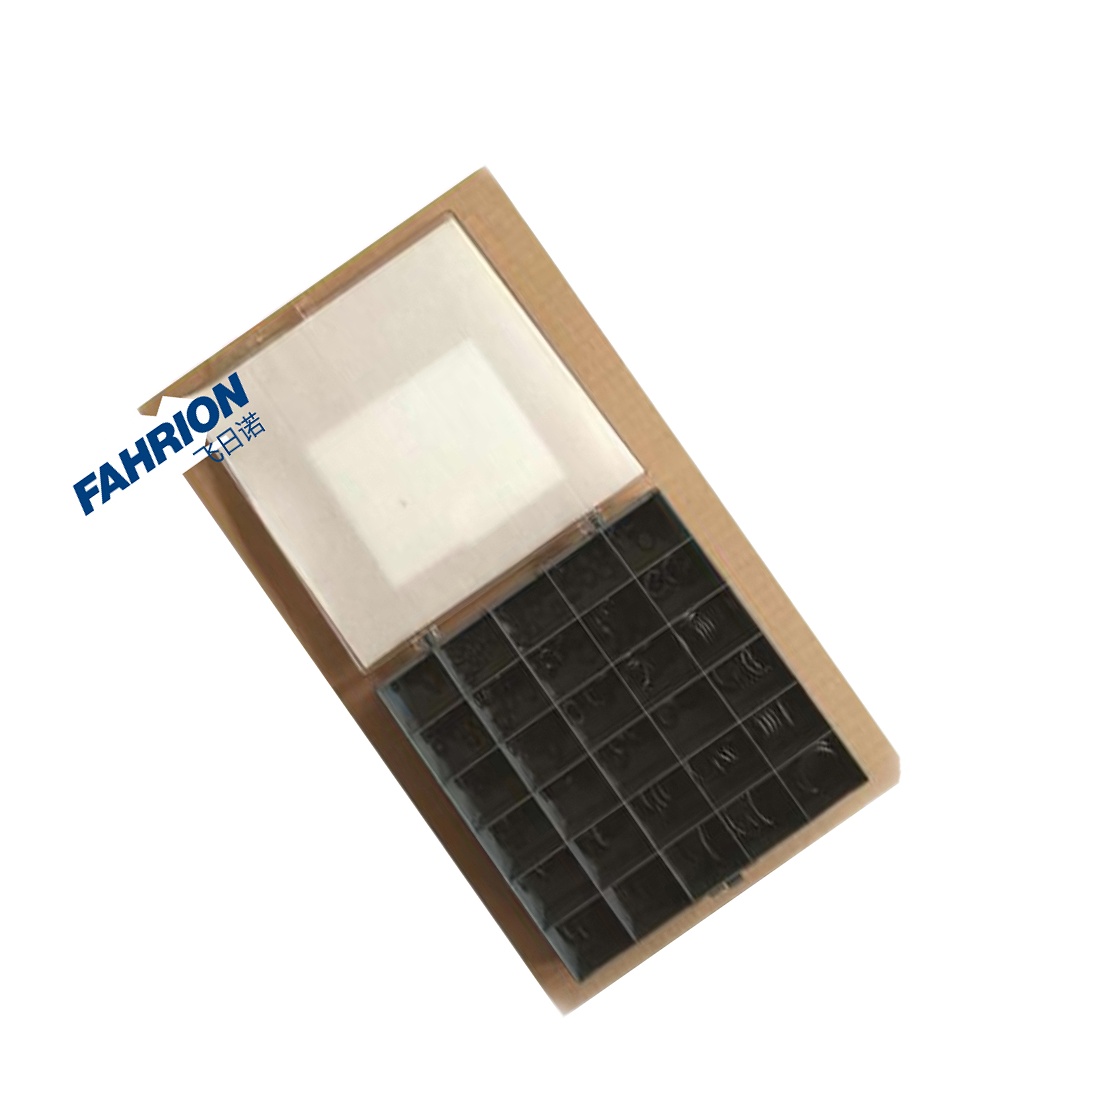 FAHRION 氟橡胶O形圈套装盒 GD99-900-512